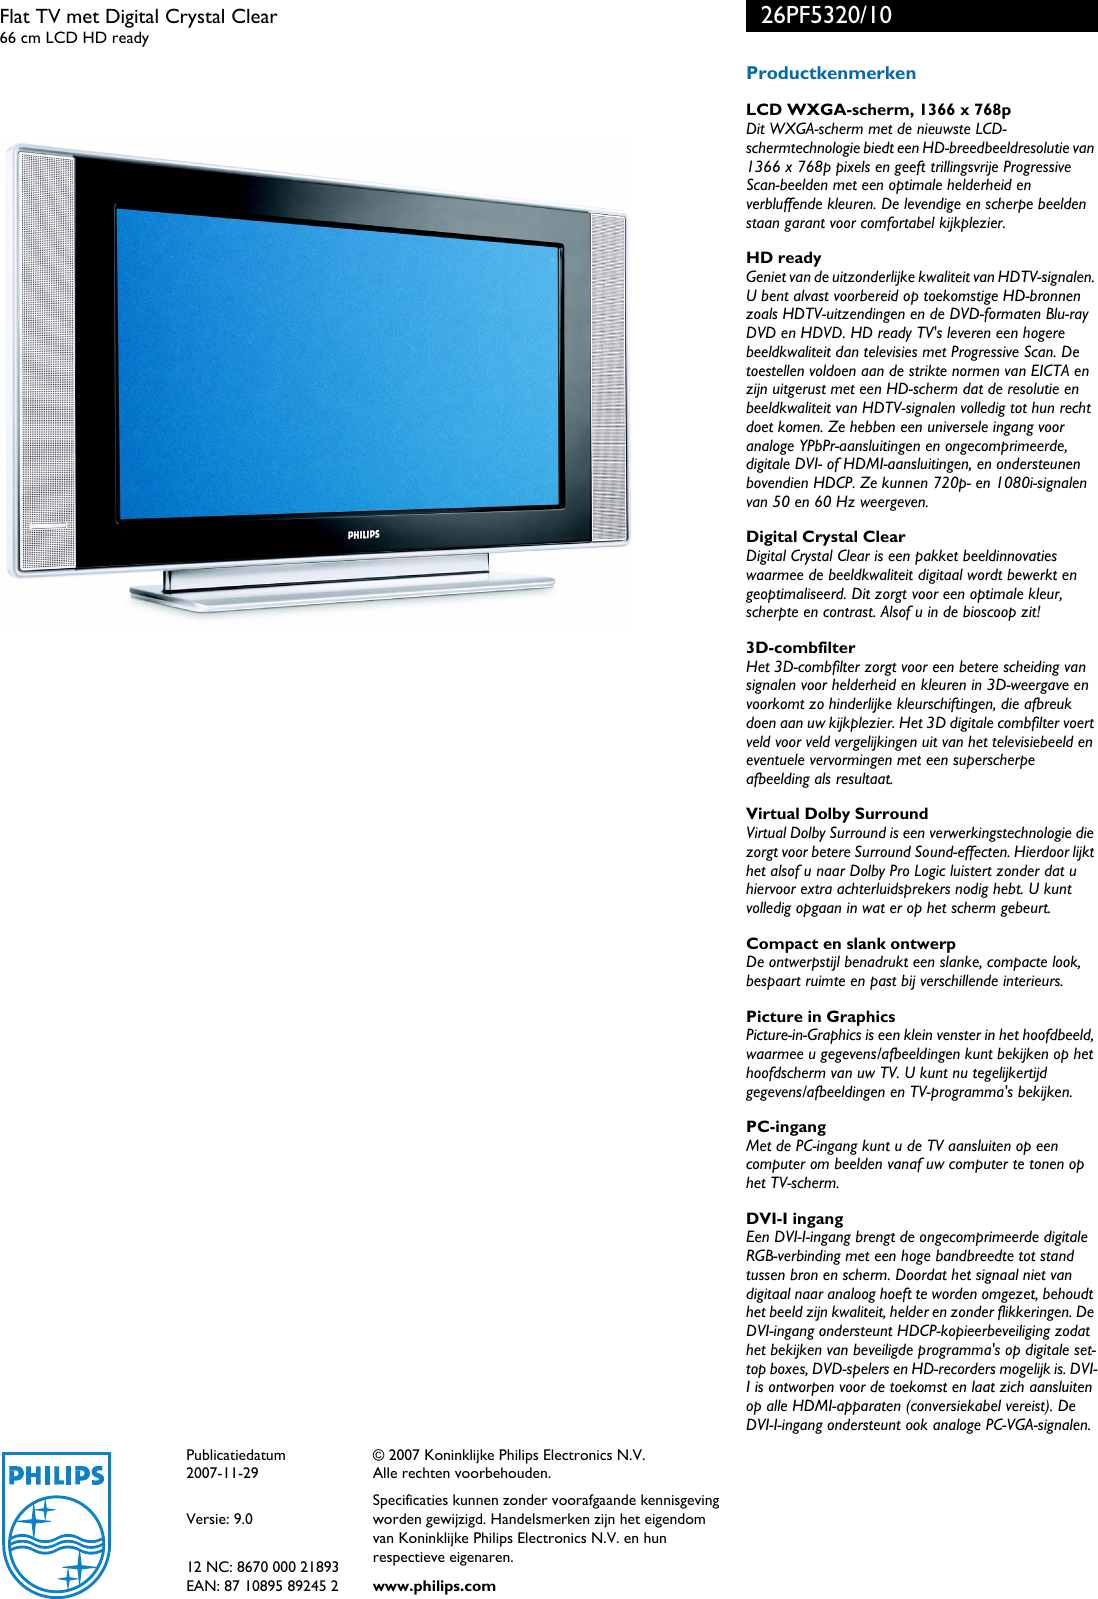 Philips 26PF5320/10 Flat TV Met Digital Crystal Brochure 26pf5320 10 Pss Nldbe